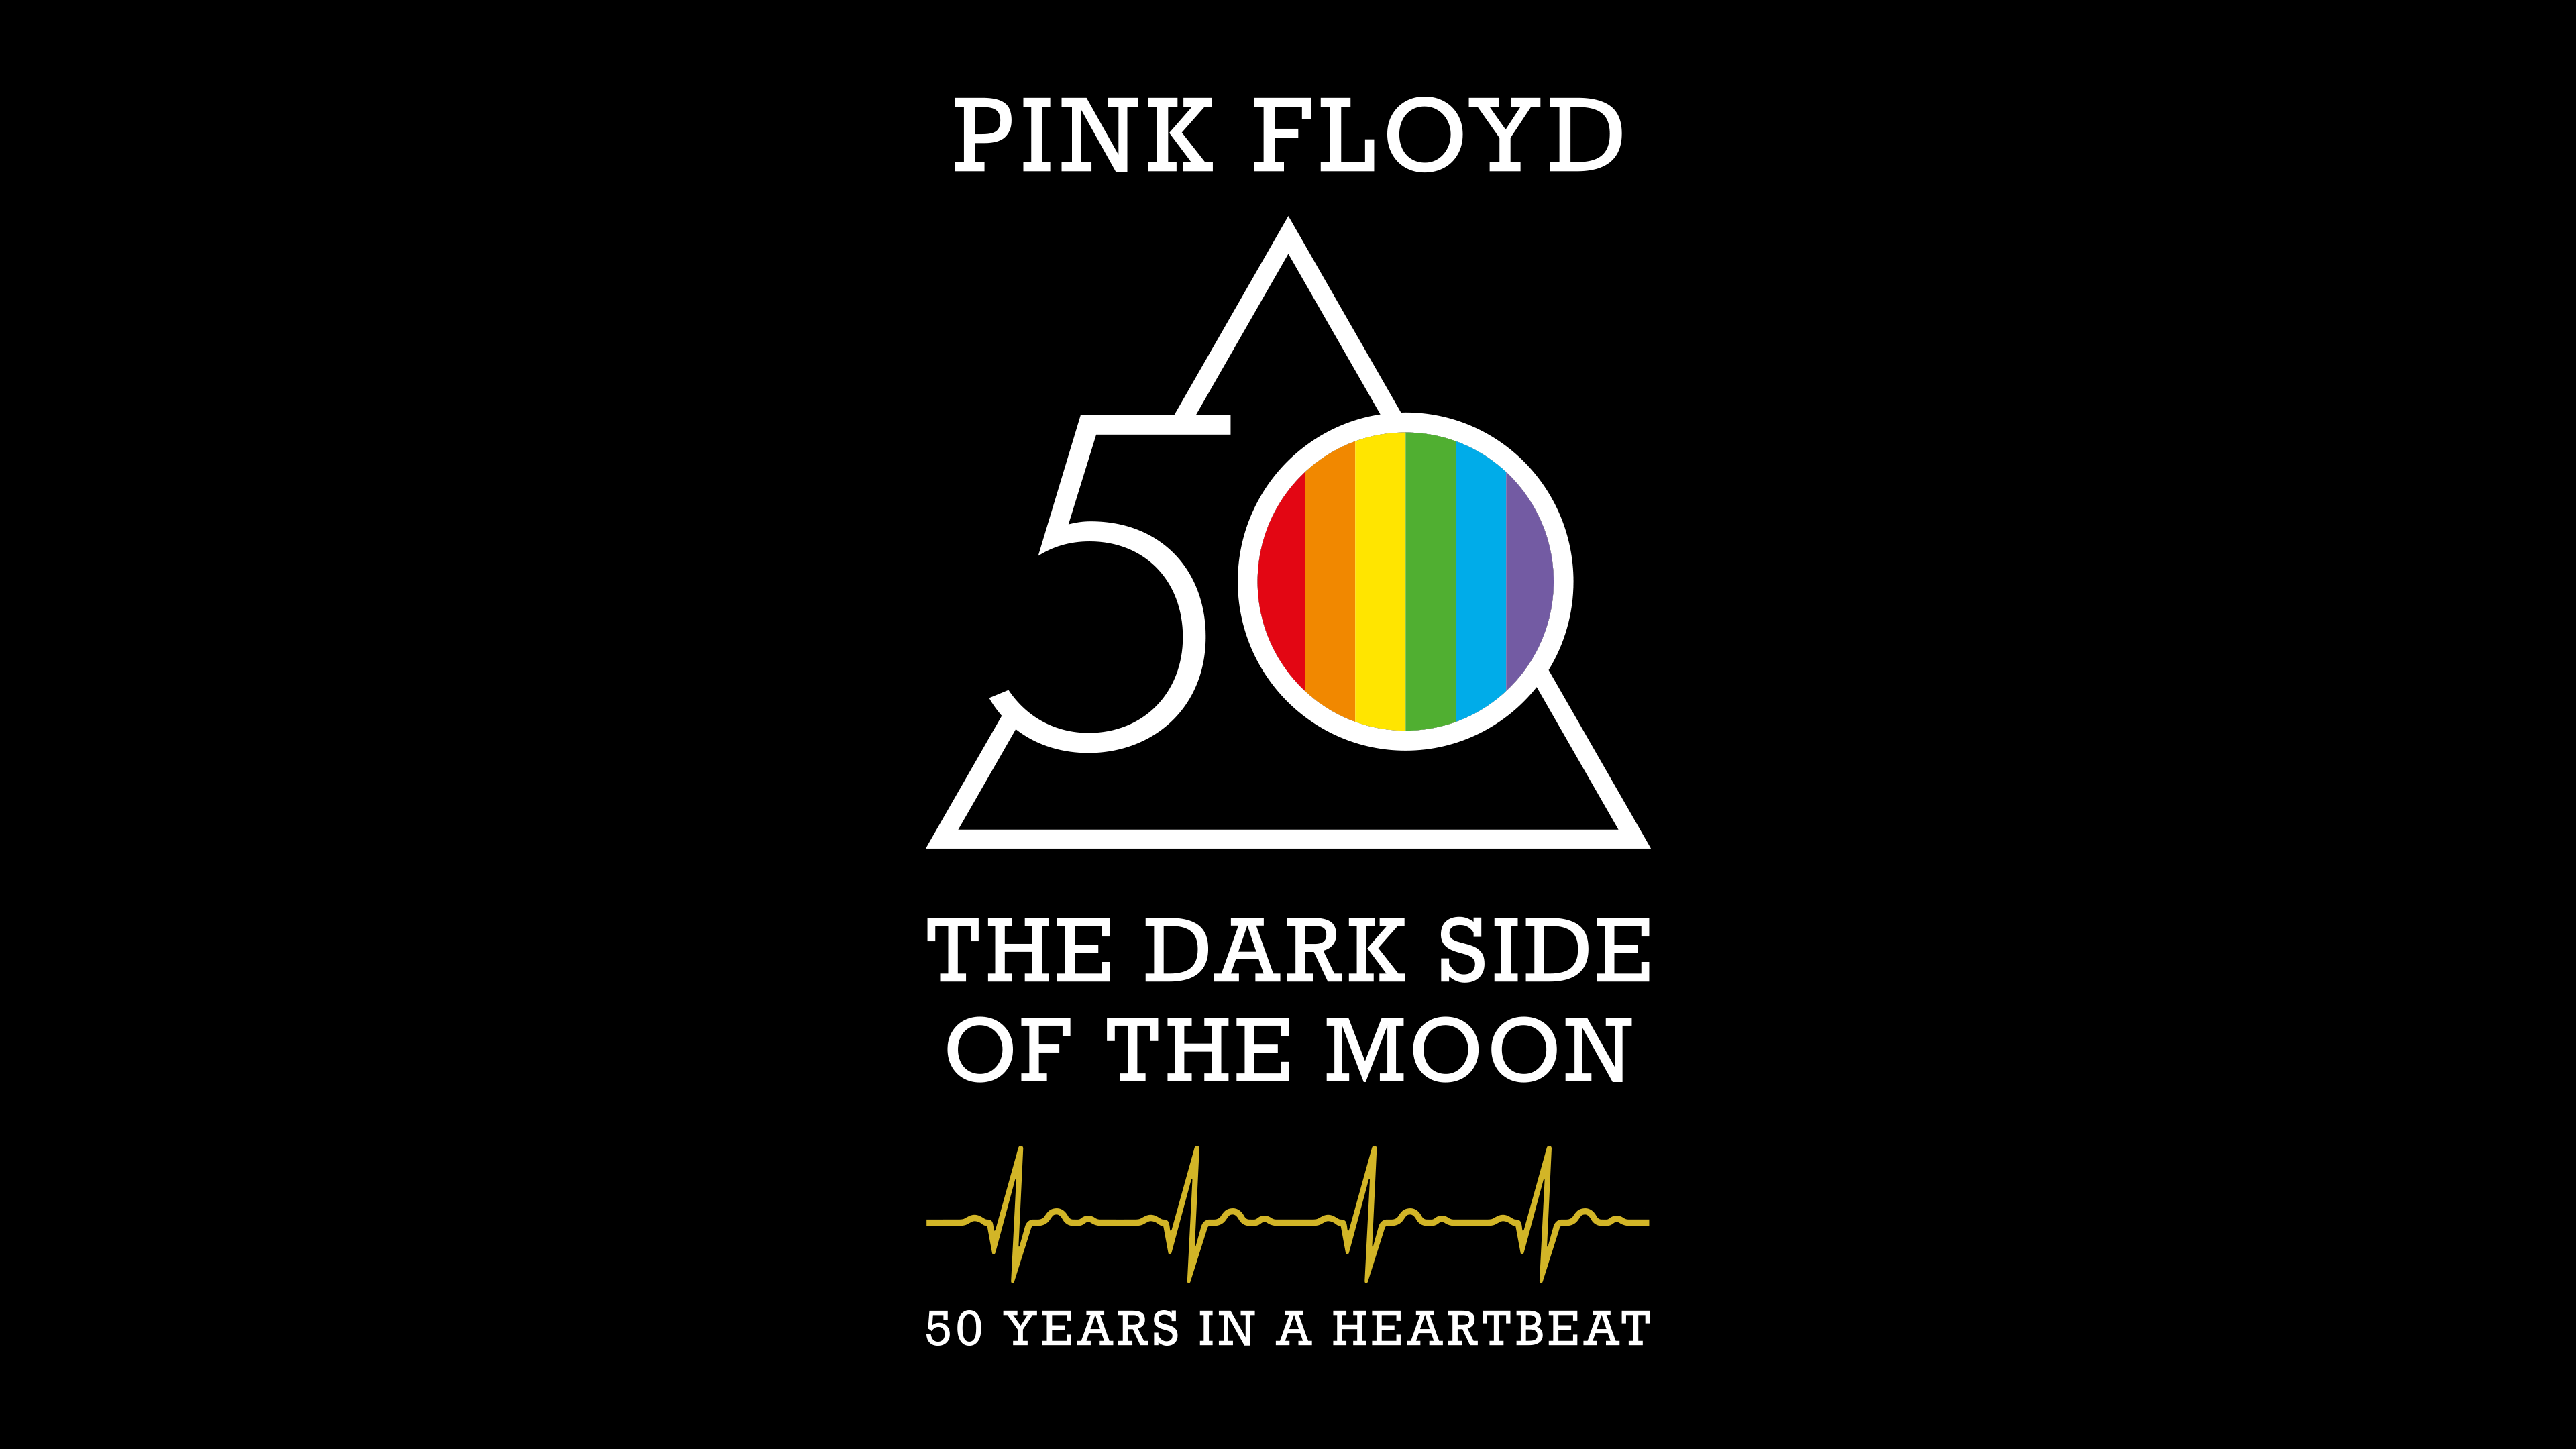 Pink Floyd's Dark Side of the Moon - Giant Film Milwaukee, WI